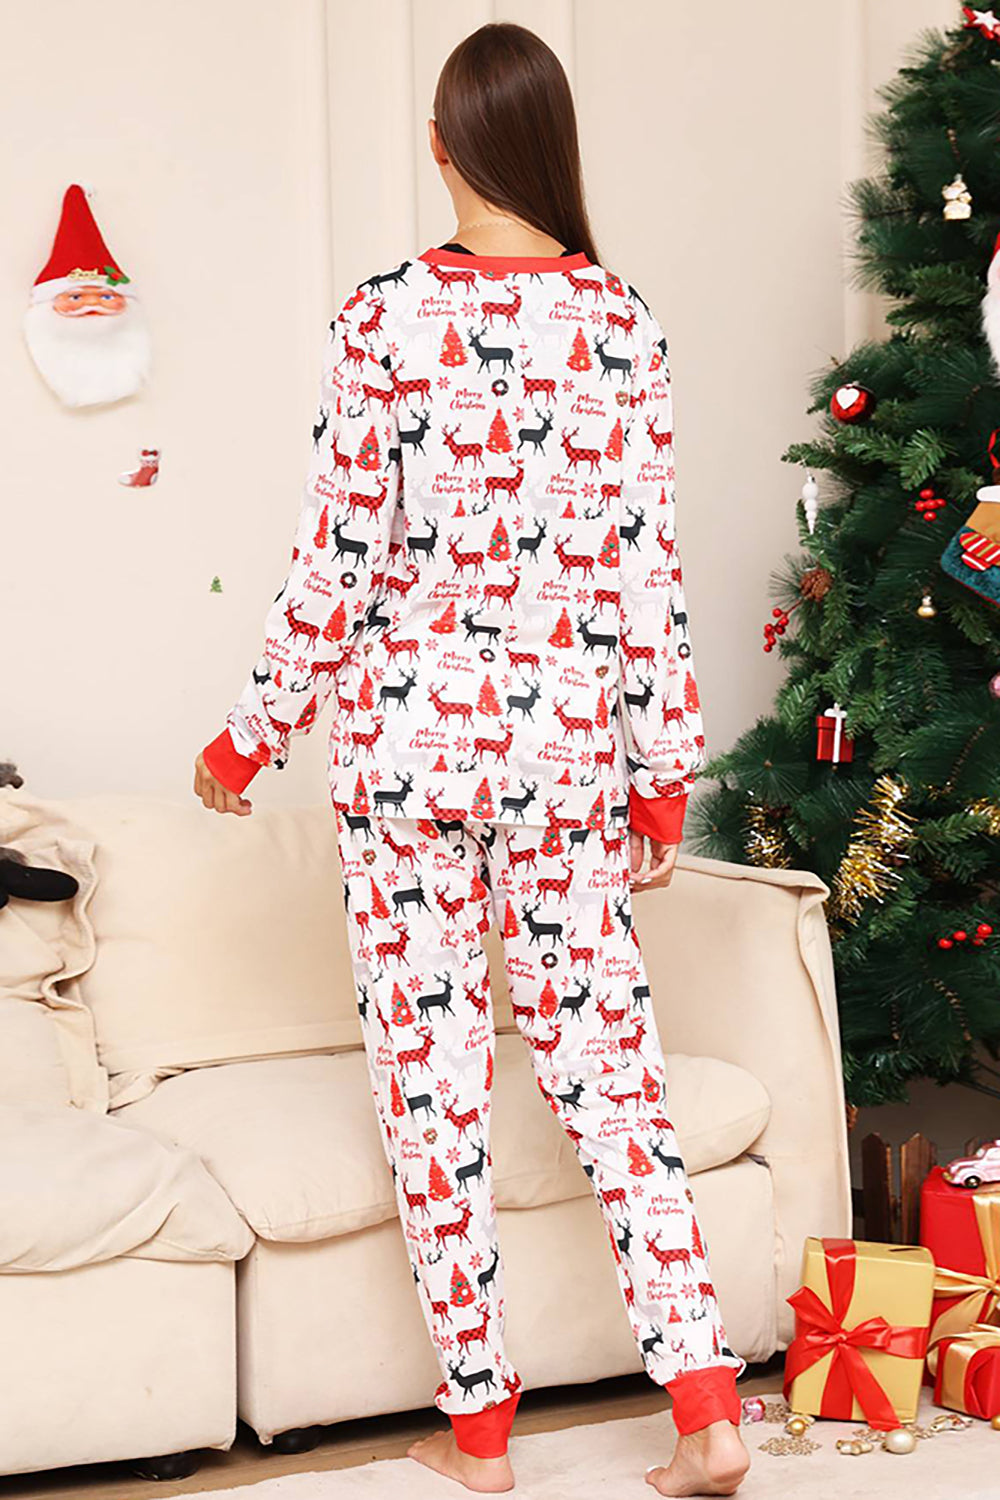 Christmas White and Tree Pattern Family Matching Pajamas Set